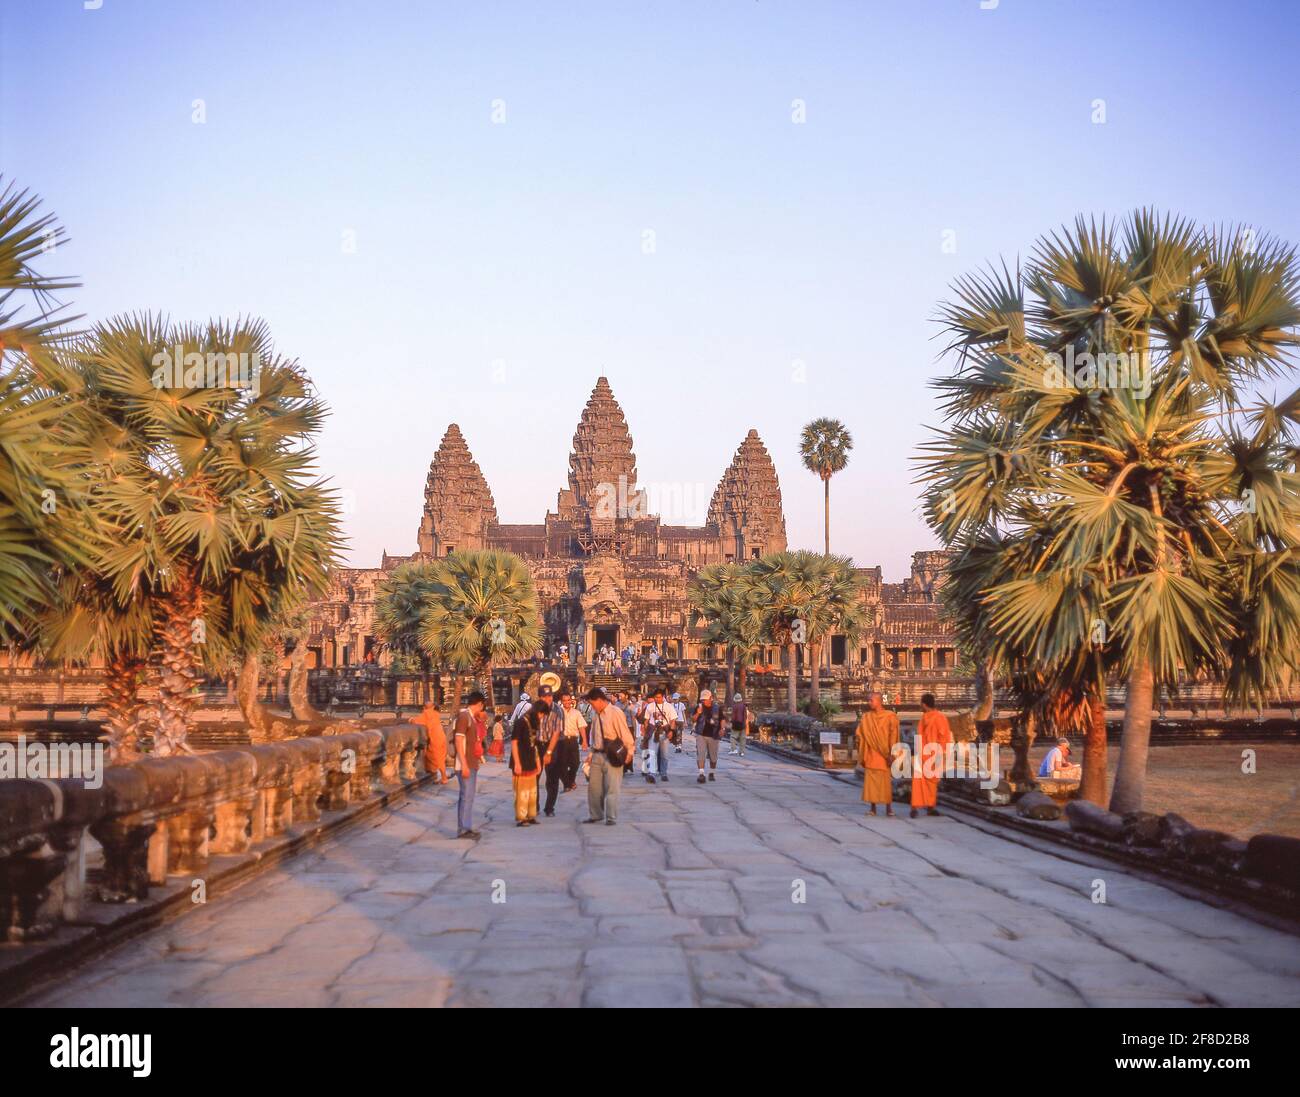 Chemin vers le temple d'Angkor Wat, Angkor, Siem Reap, Royaume du Cambodge Banque D'Images